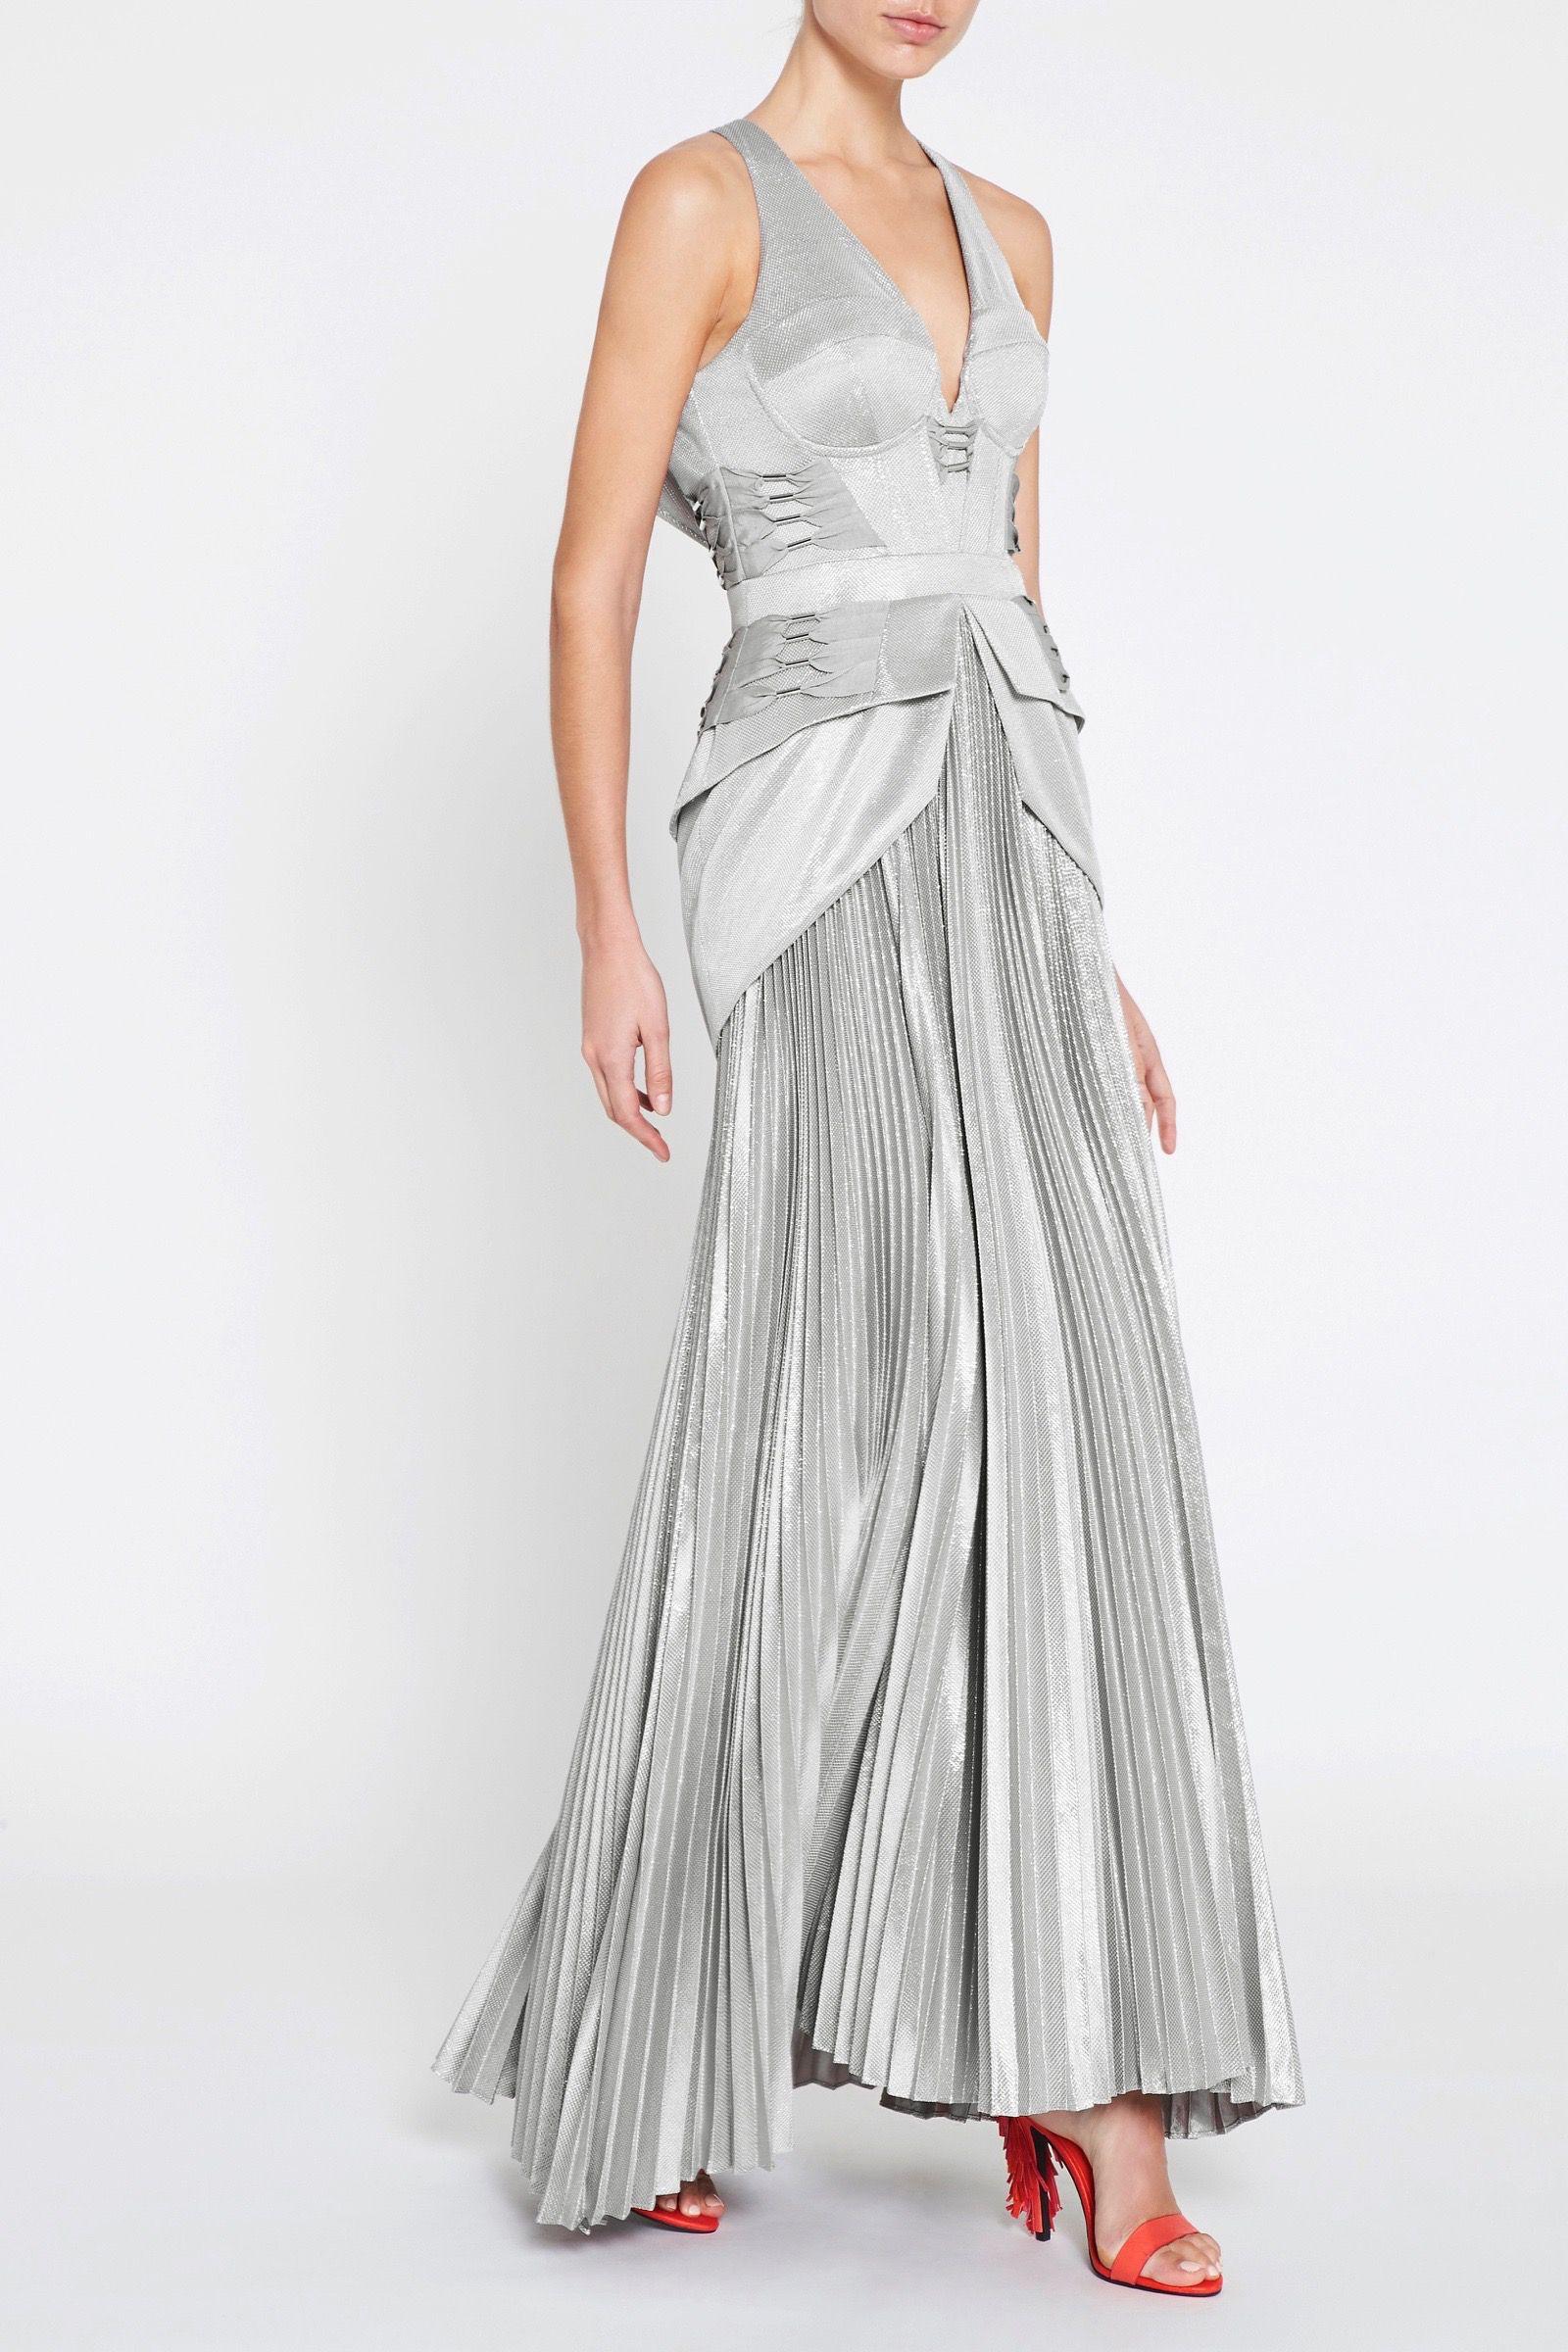 sass and bide silver dress